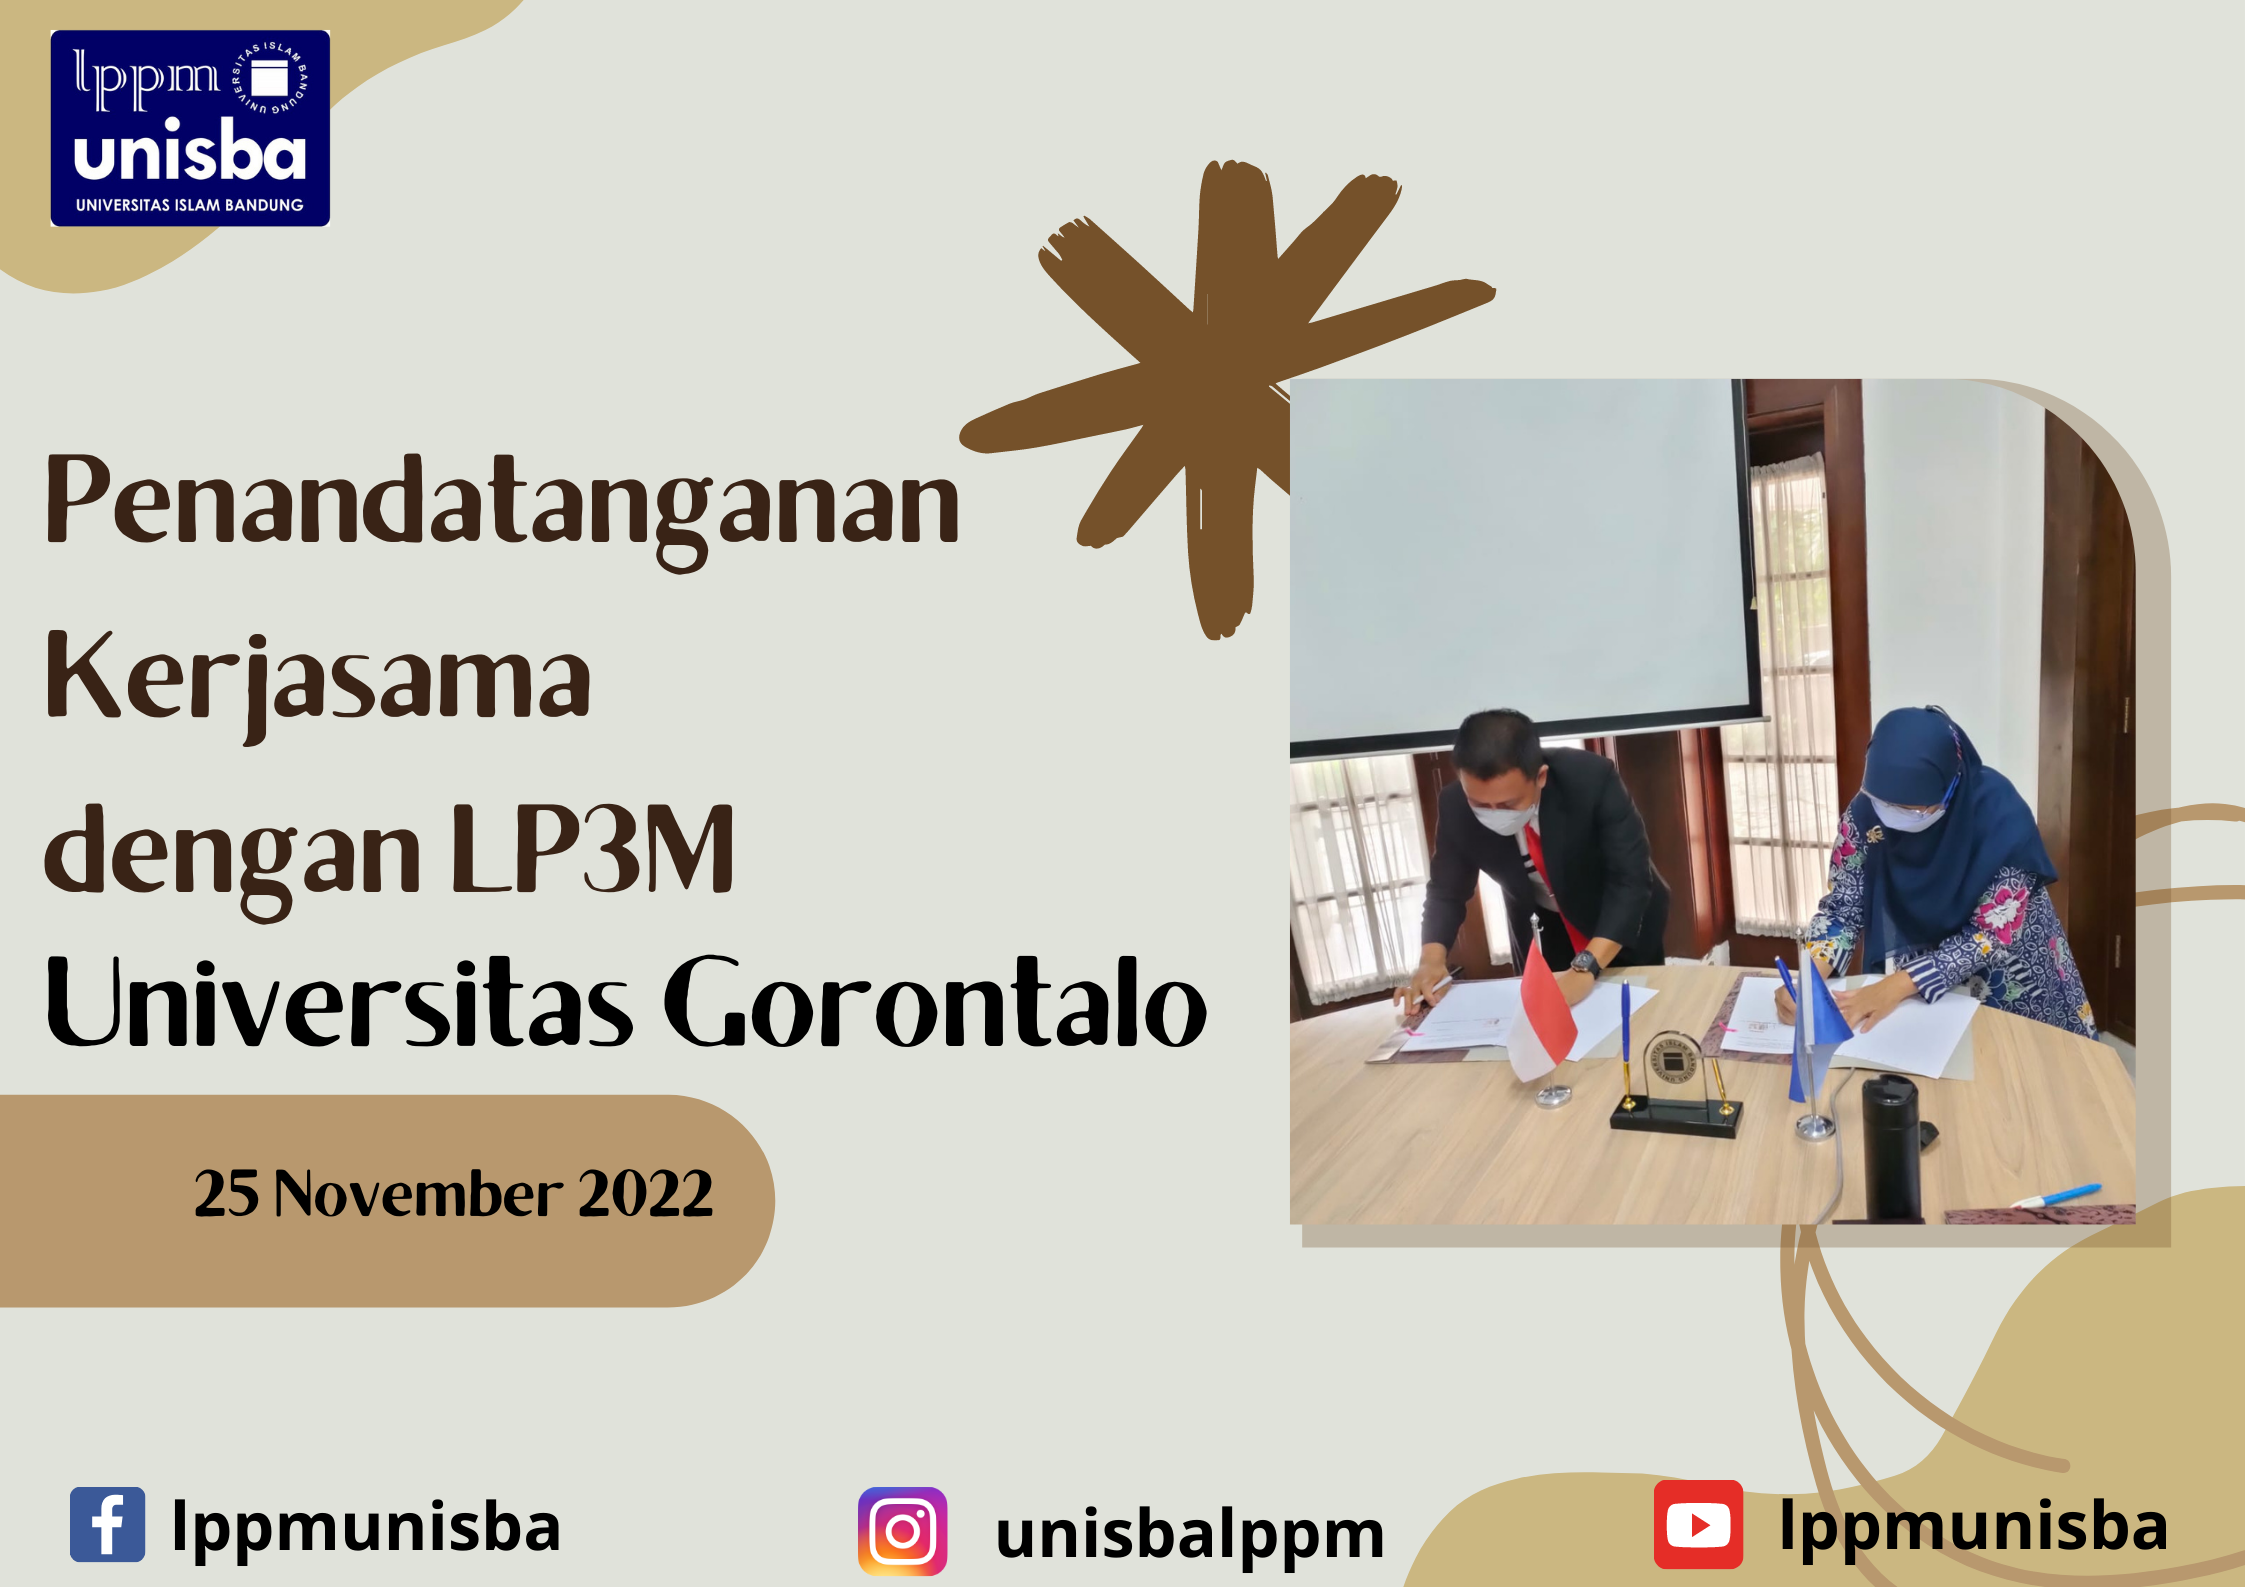 Penandatangan Kerjasama dengan LP3M Universitas Gorontalo